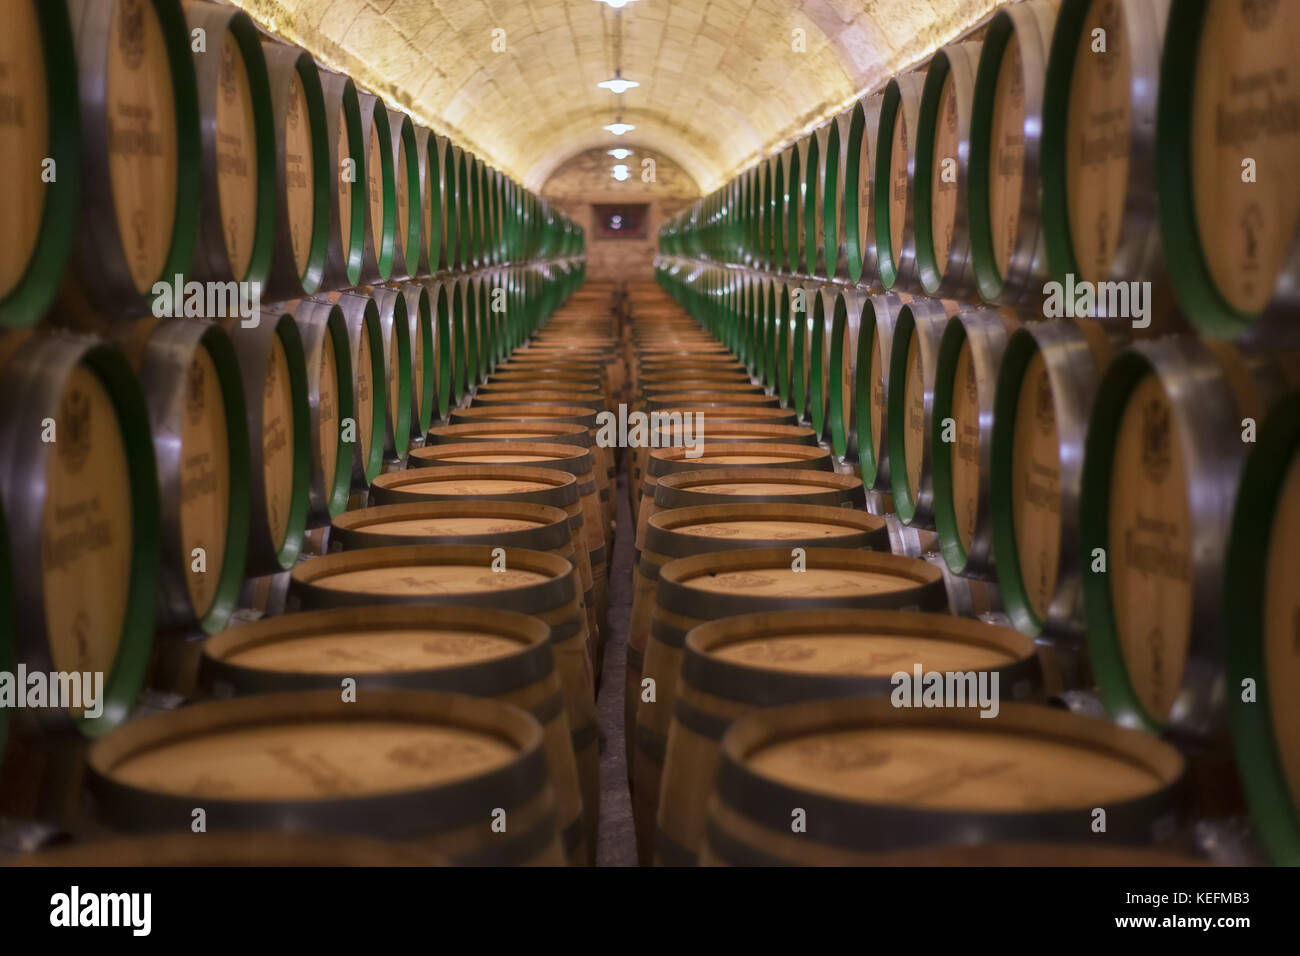 Barrels row in a Rioja winery in Alava Stock Photo